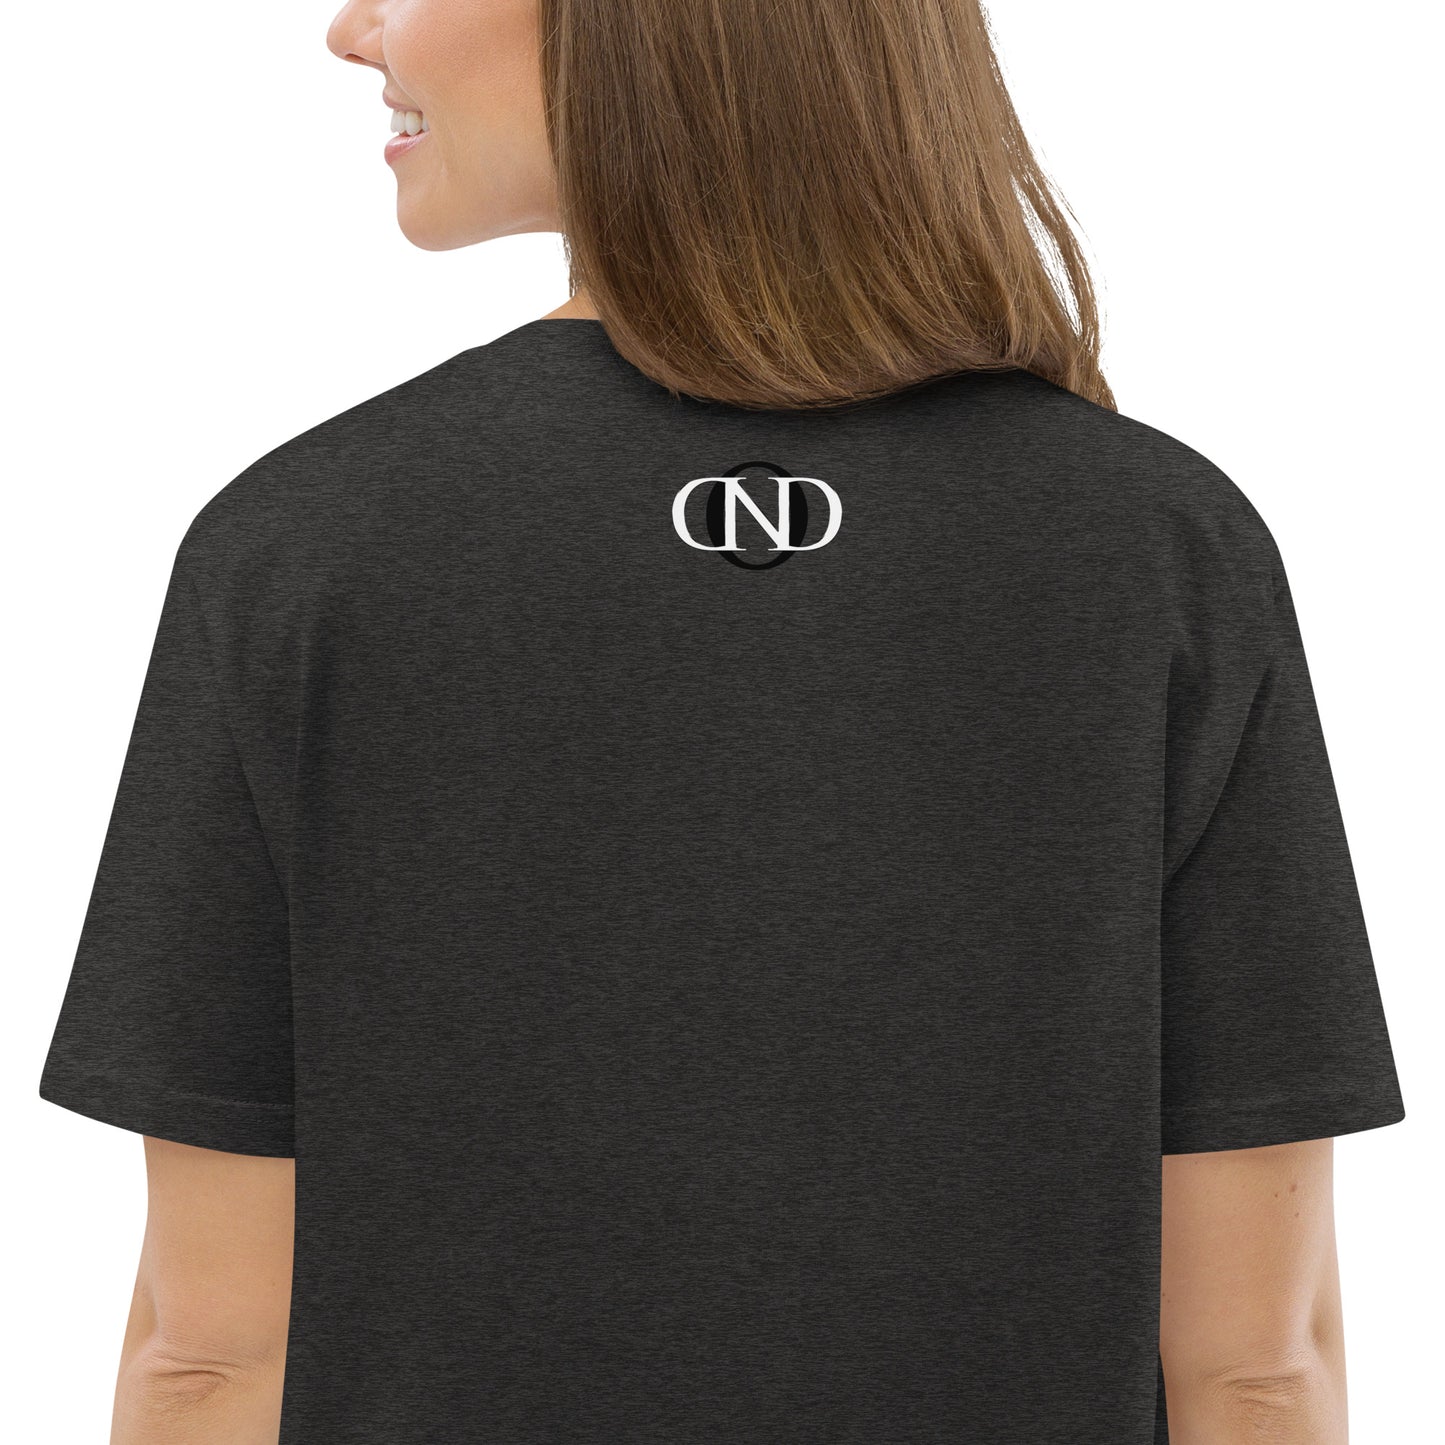 Neduz Designs Sense I Ate My Date Organik pamuklu unisex t-shirt